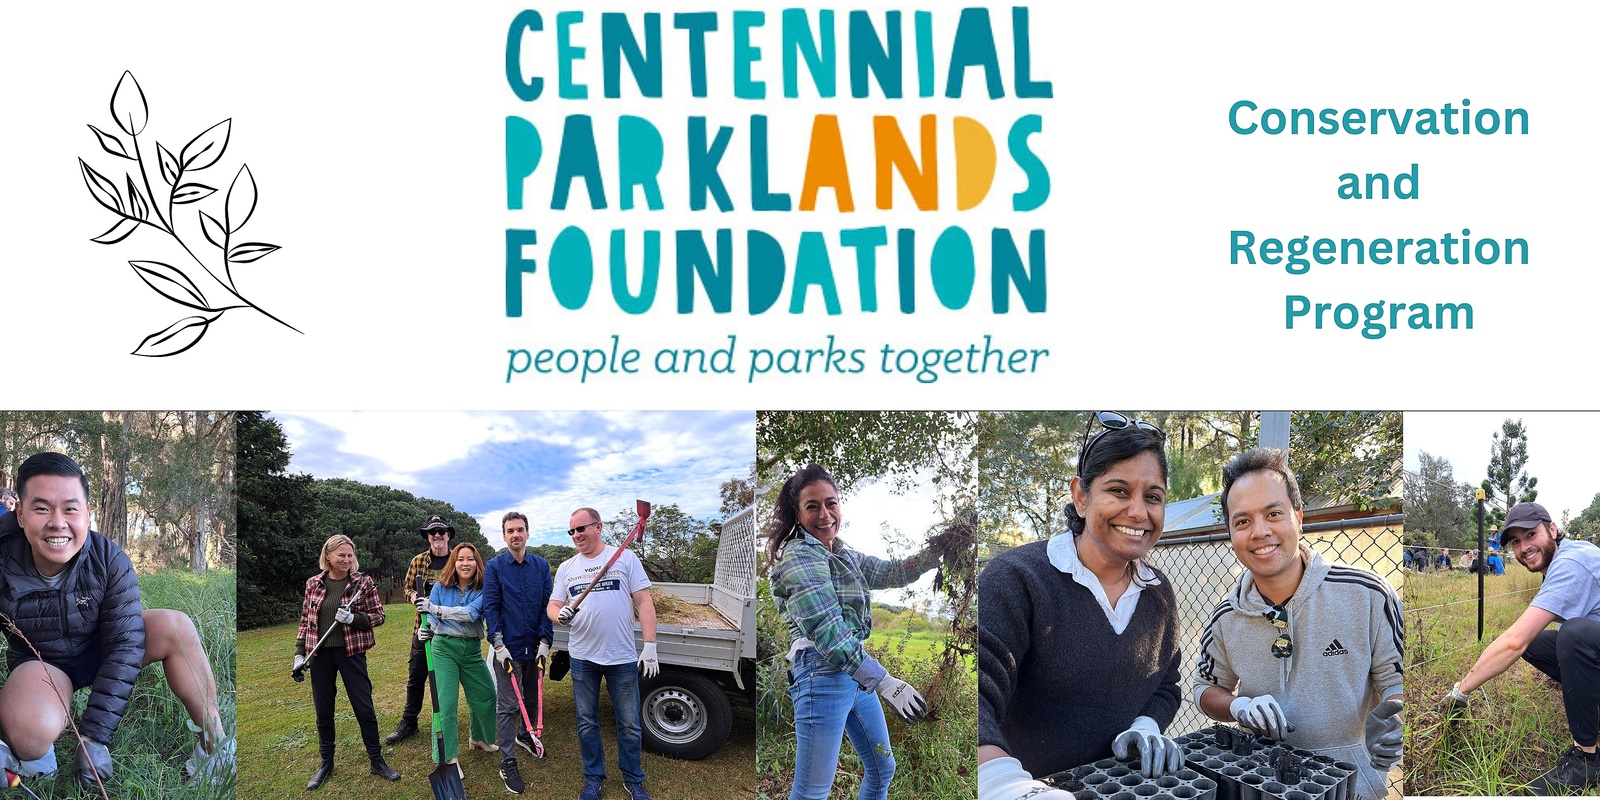 Banner image for Centennial Parklands Foundation Corporate Volunteering Conservation and Regeneration Program 